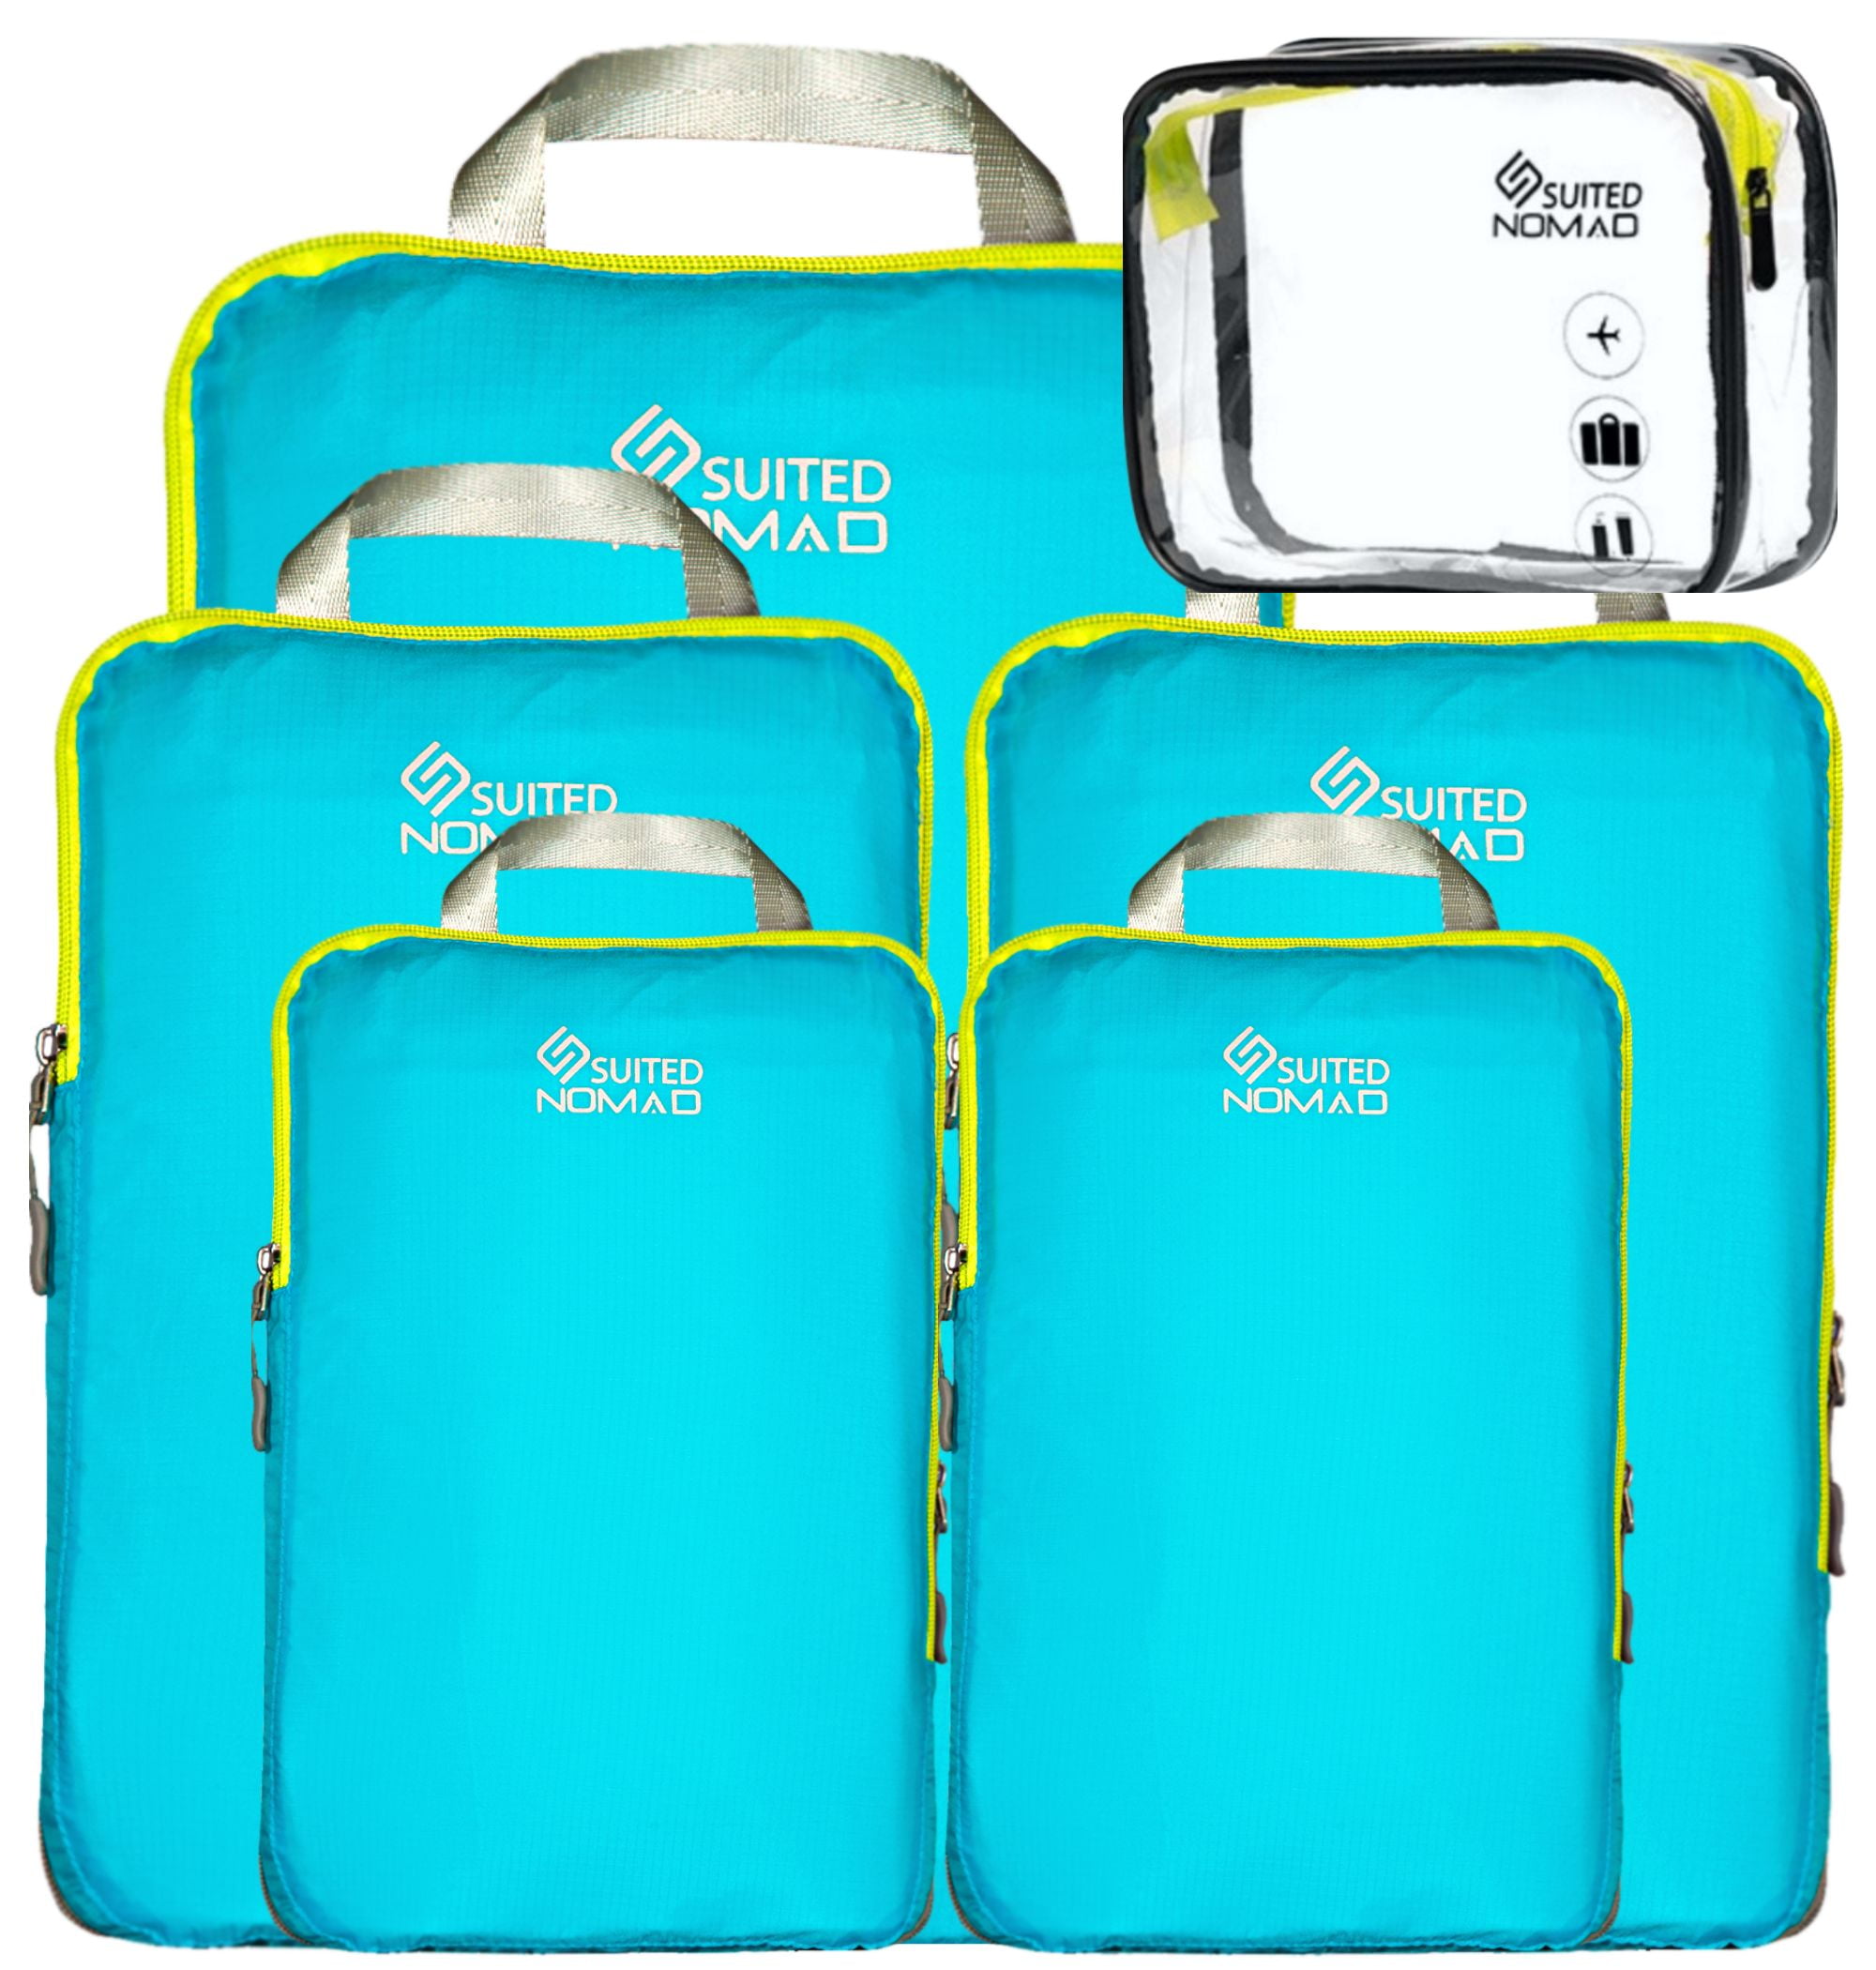 BAGSMART Compression Packing Cubes for Travel, 6 Set Travel Packing Cubes  for Suitcases, Compression Suitcase Organizer Bags Set for Travel